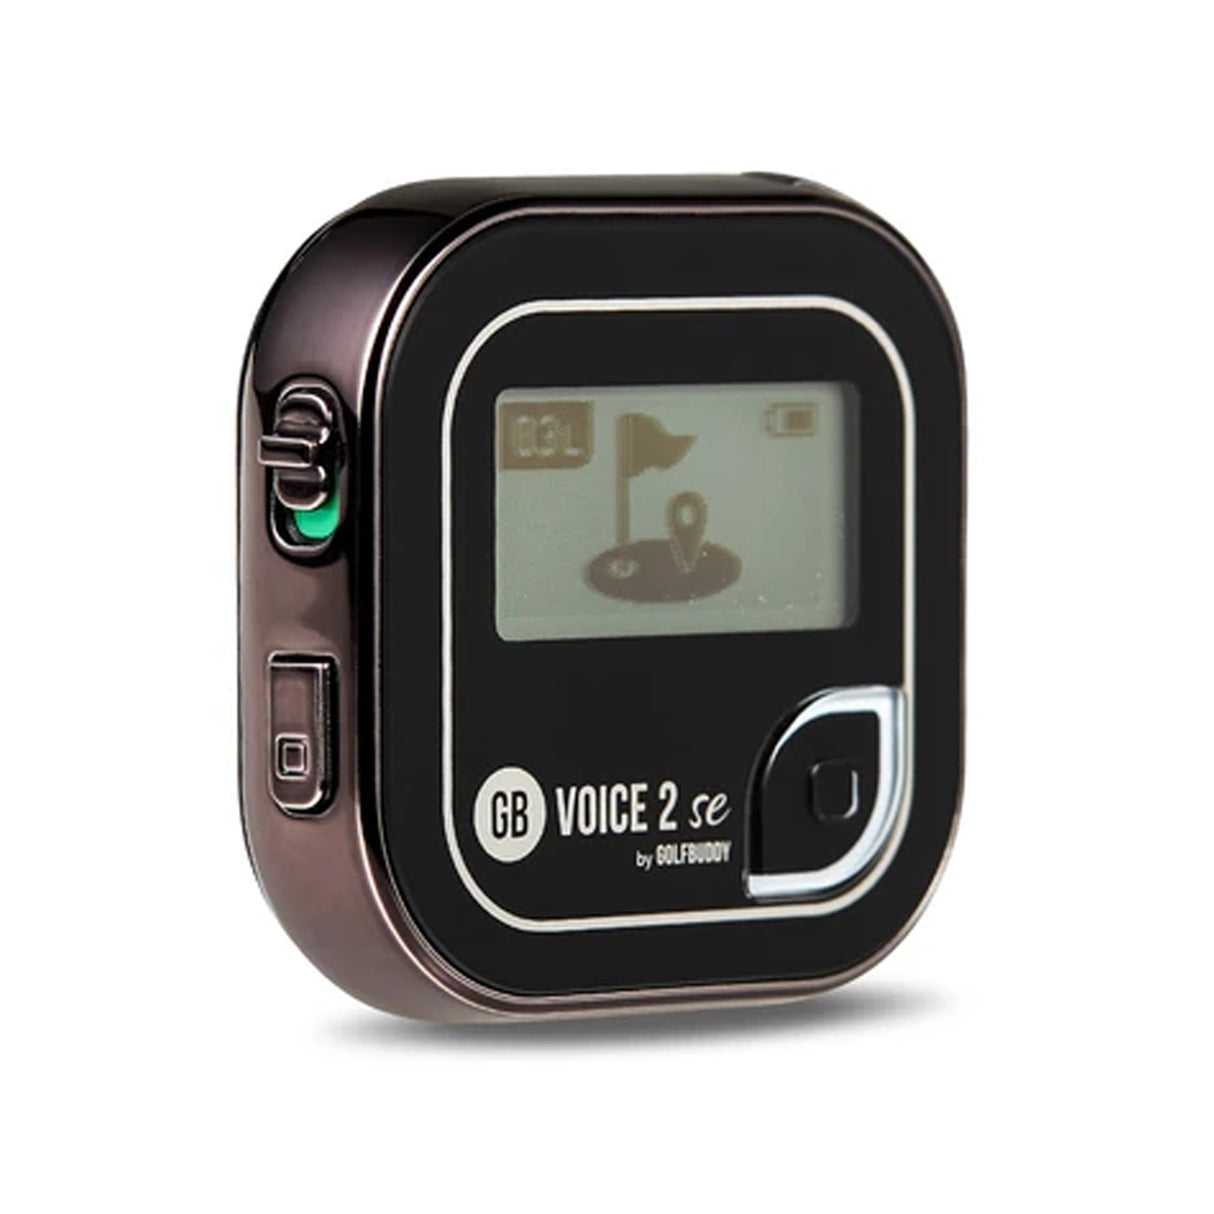 GolfBuddy Voice 2 SE Talking GPS Rangefinder Unit - Manufacturer Refurbished